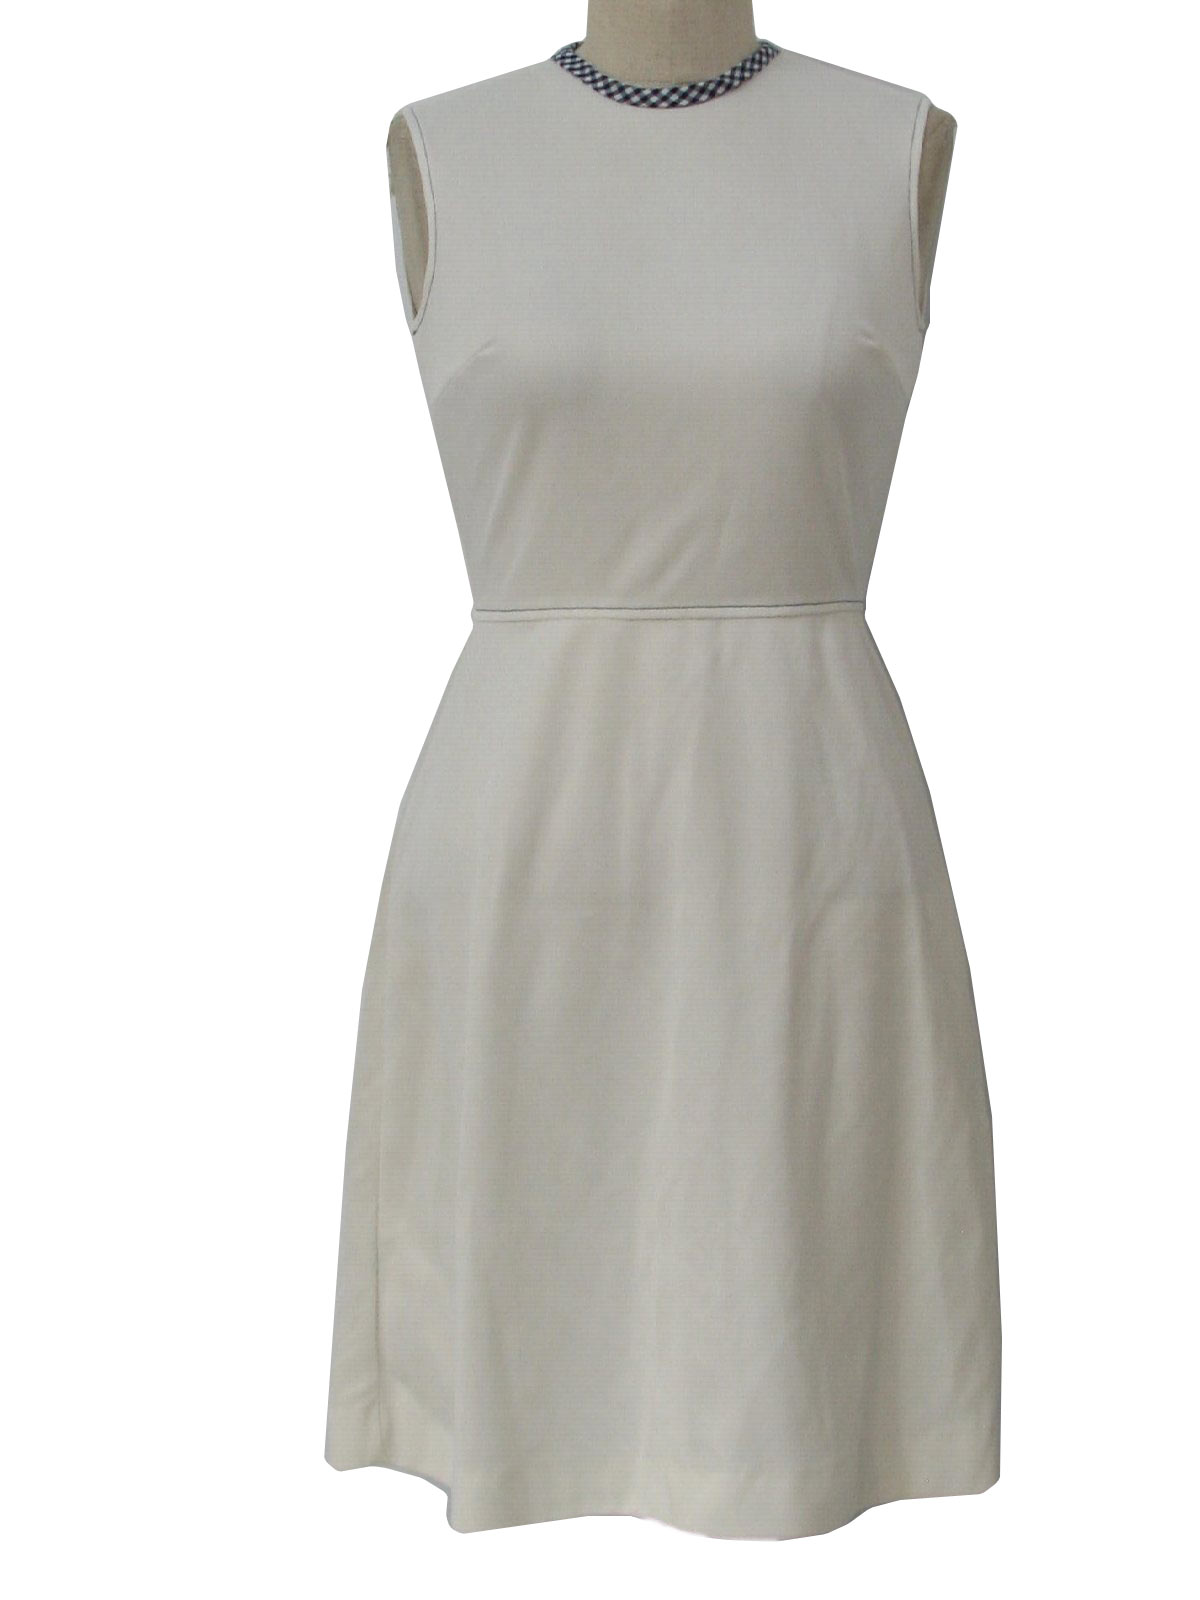 Retro 1970's Dress (care label) : 70s -care label- Womens white and ...